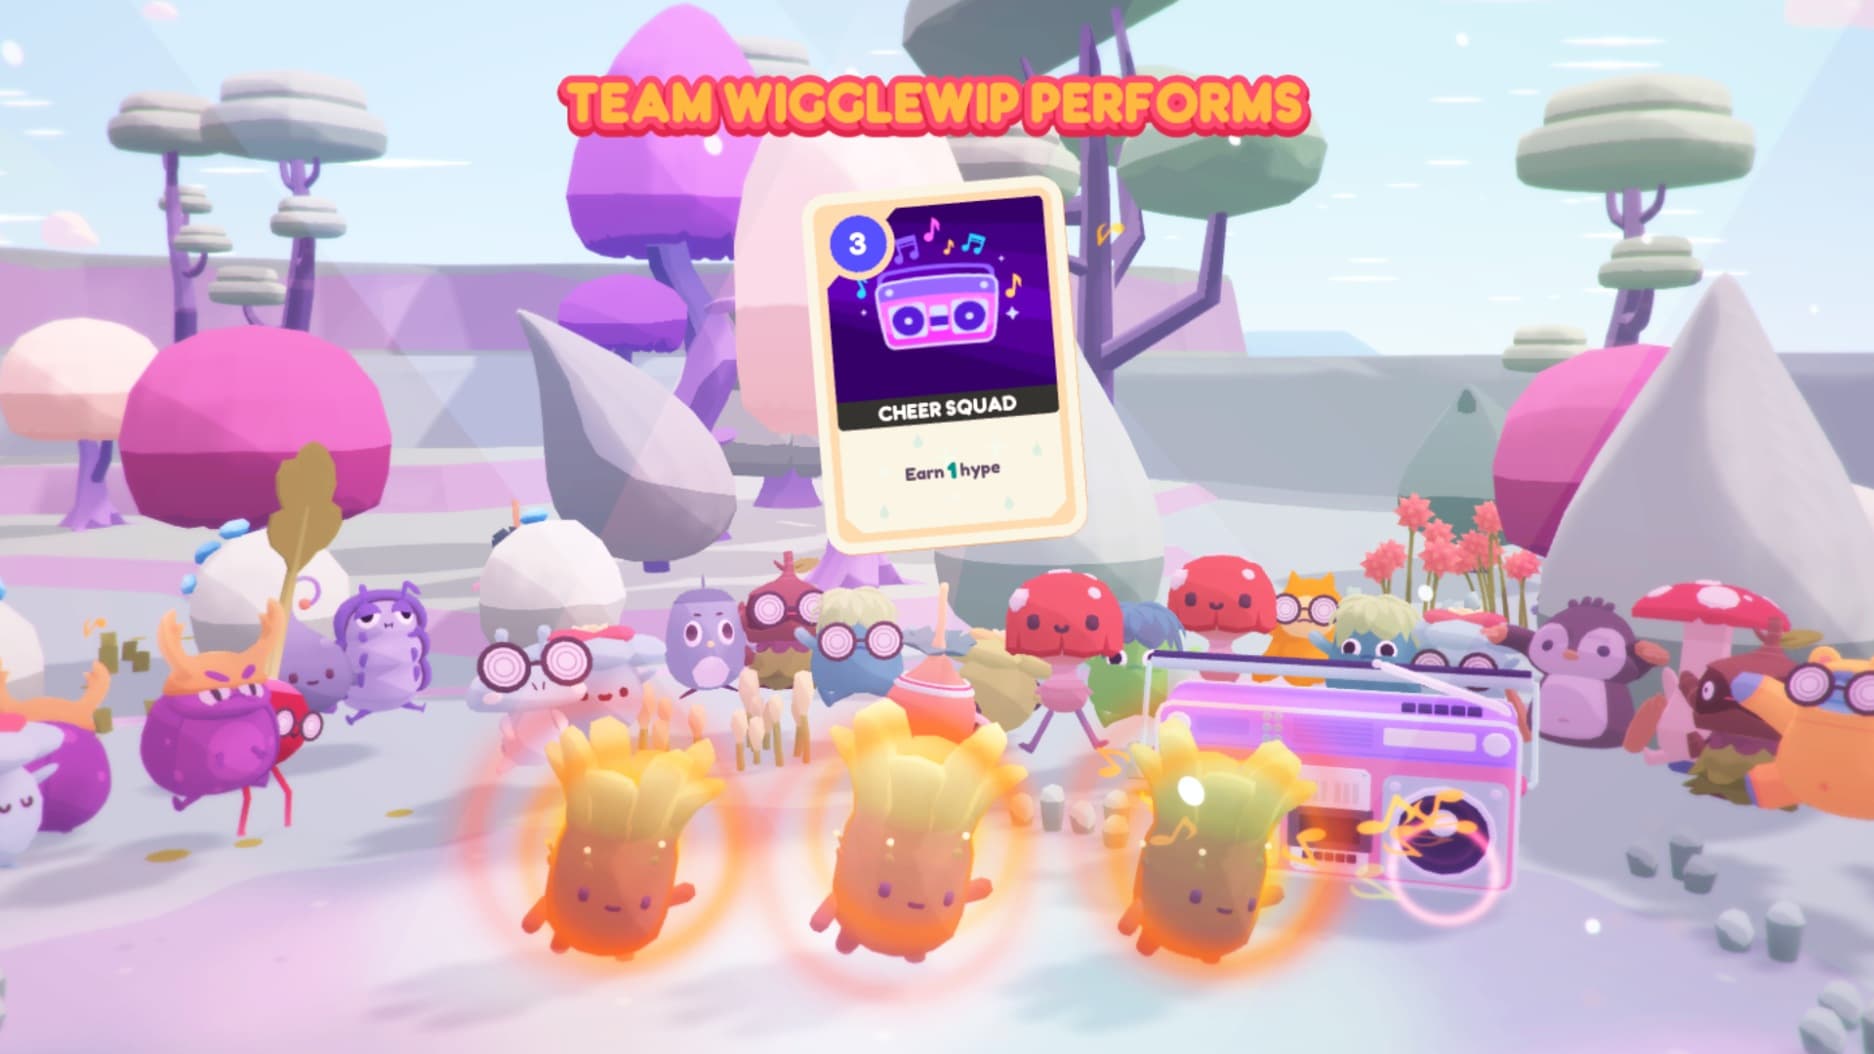 Screenshot of wigglewip ooblets dancing next to a boombox